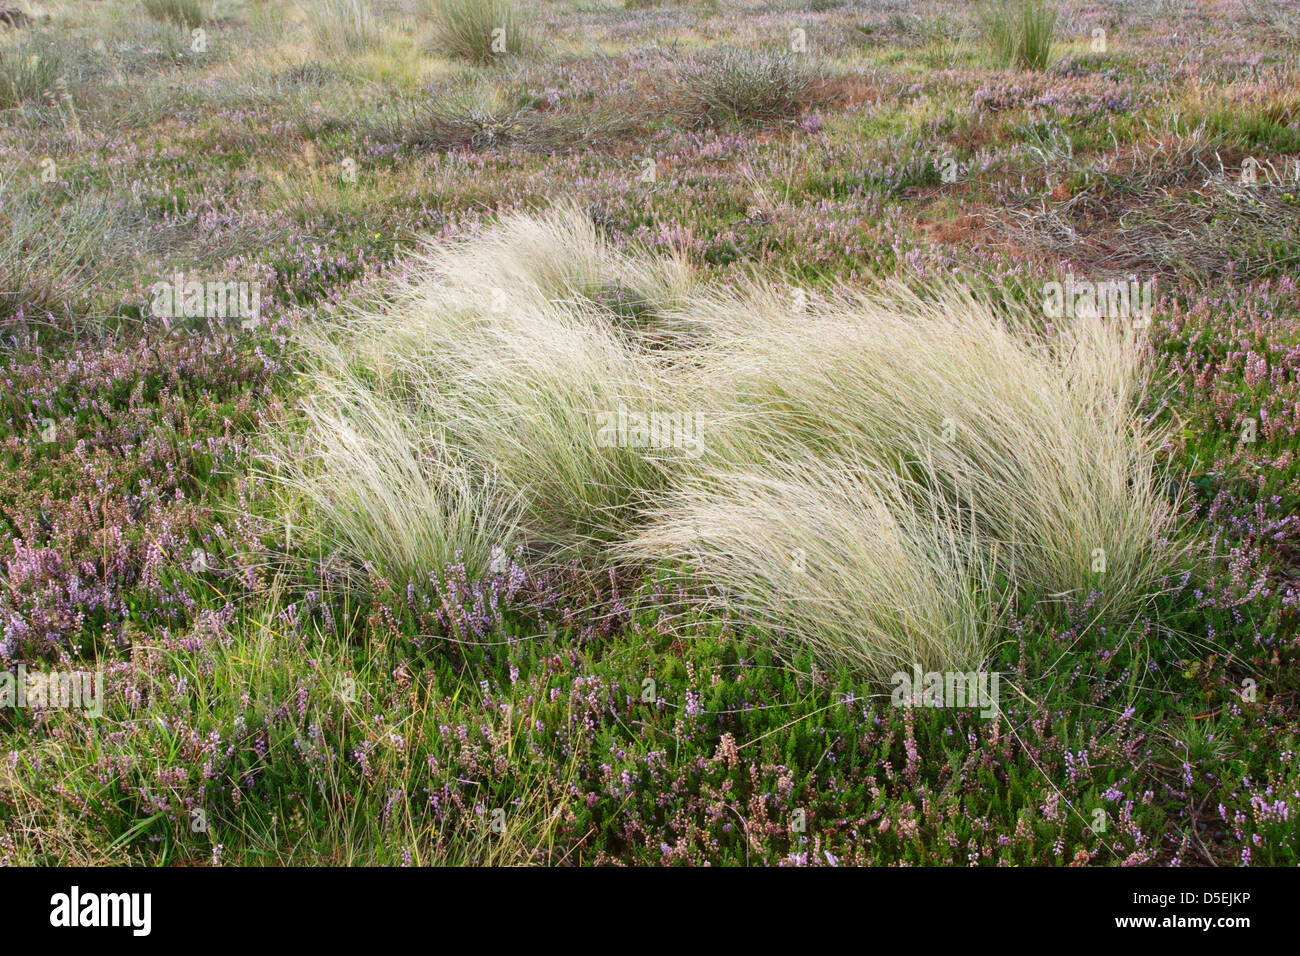 Sheep's fescue (Festuca ovina) grass growing among heather (Calluna vulgaris) Stock Photo